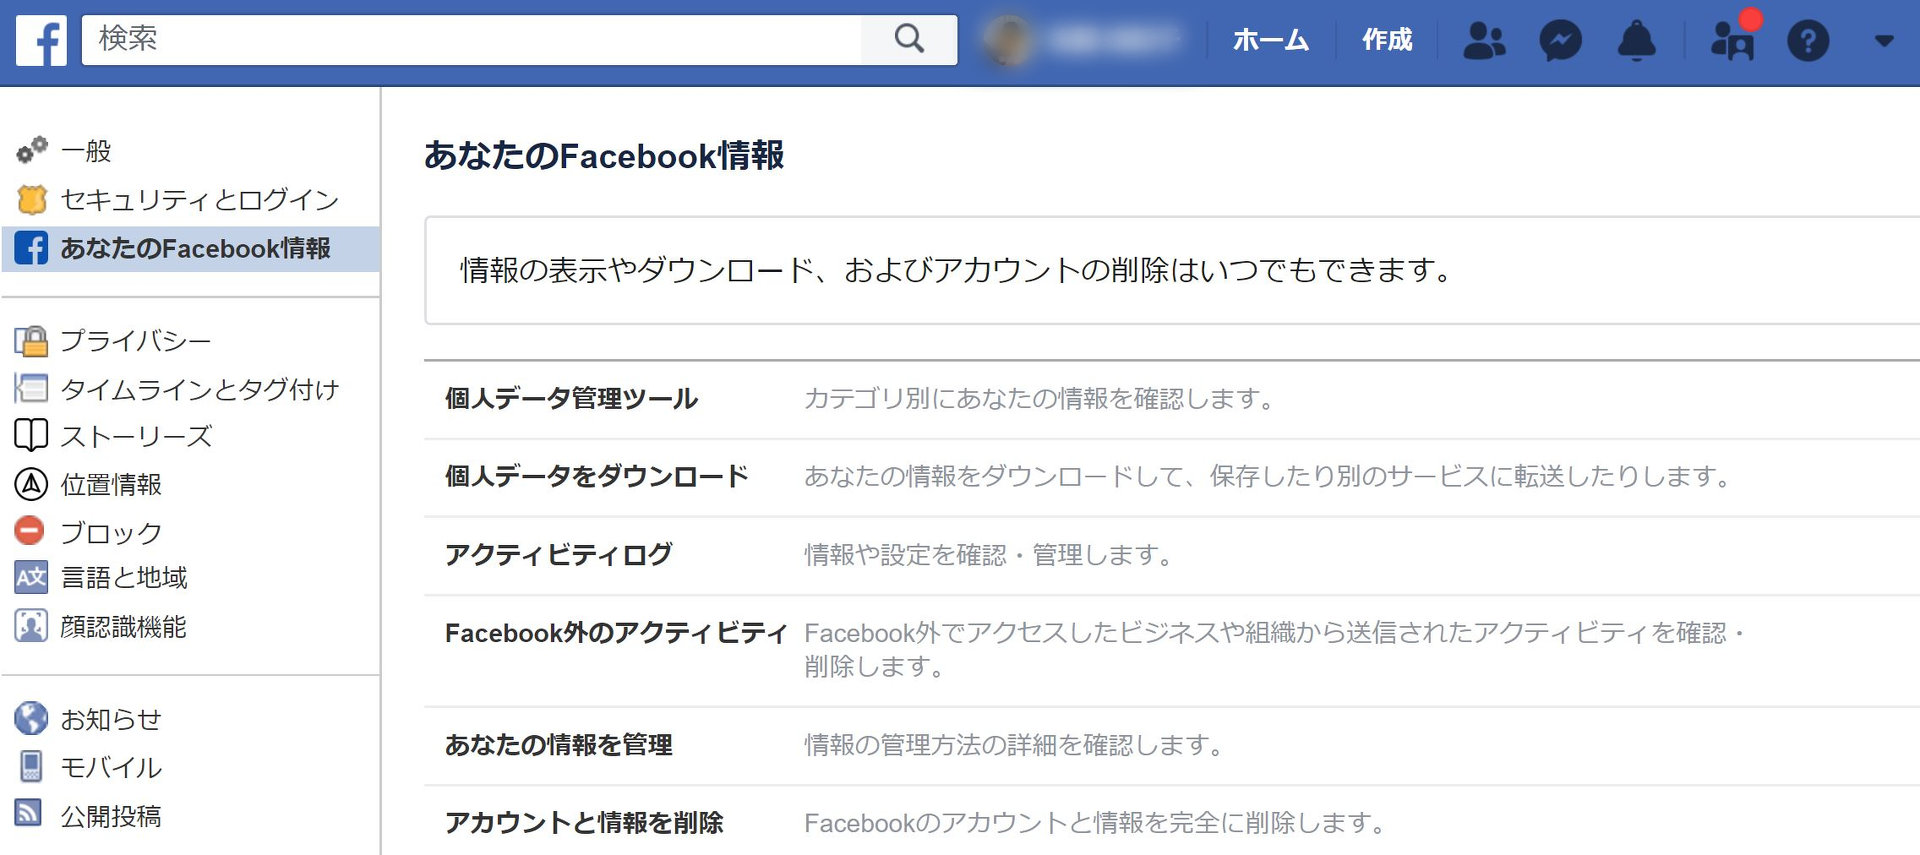 Facebook外のアクティビティ がようやく日本でもスタート 億人にプライバシー設定確認を呼び掛けも Itmedia News